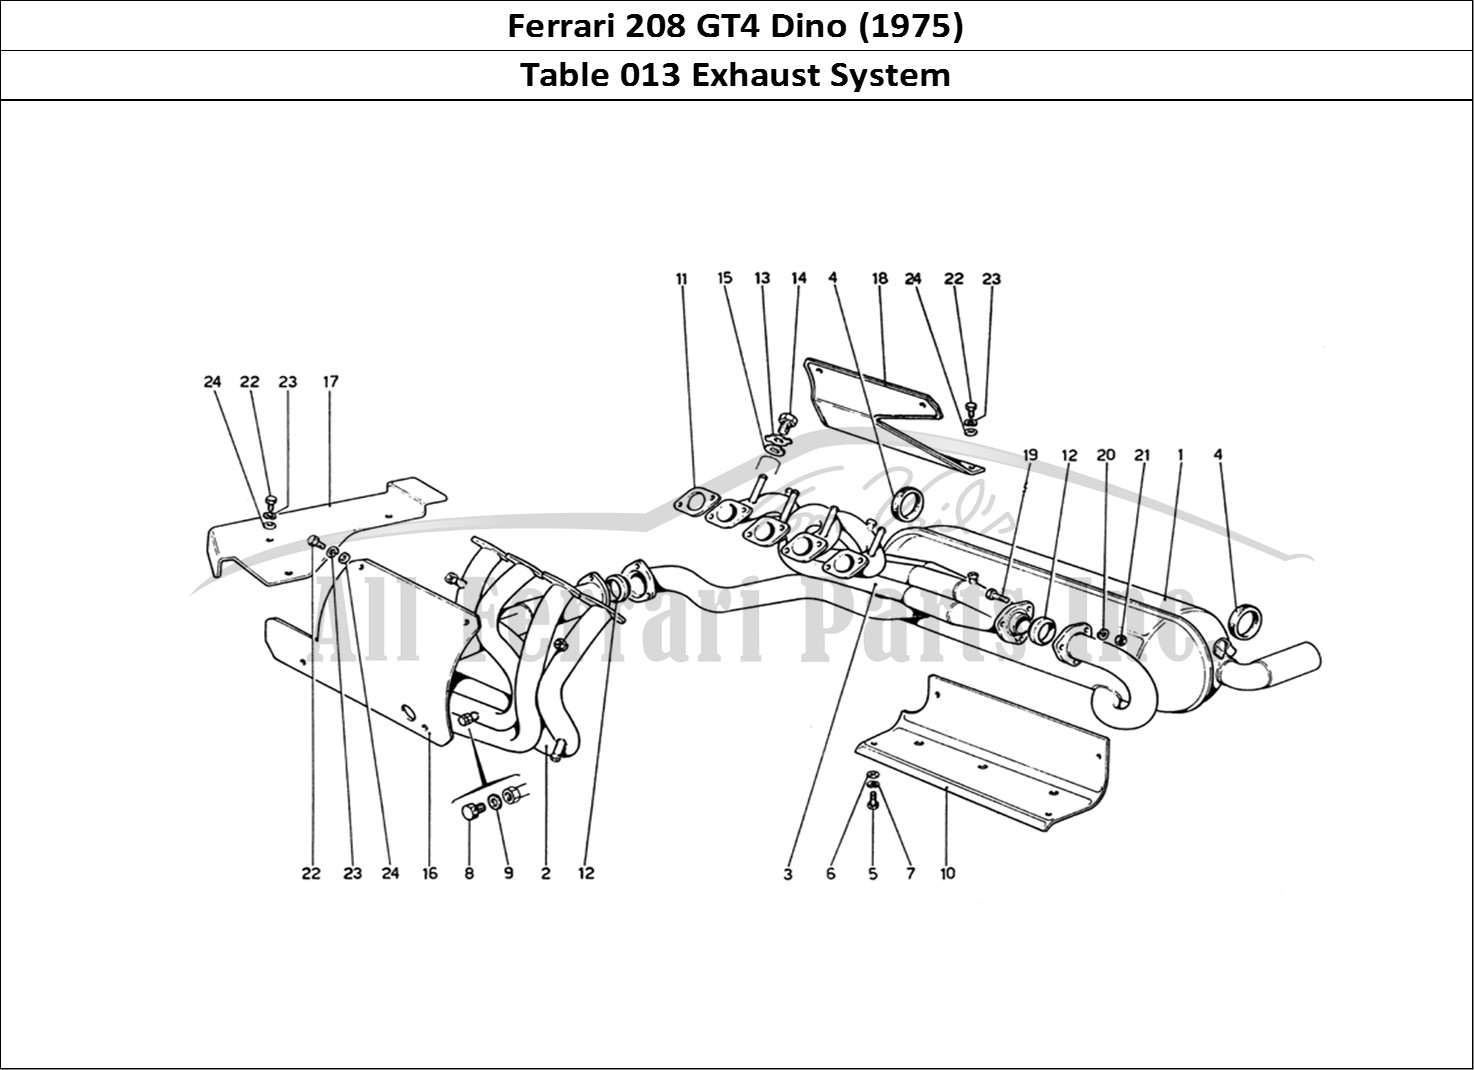 Ferrari Parts Ferrari 208 GT4 Dino (1975) Page 013 Exhaust System